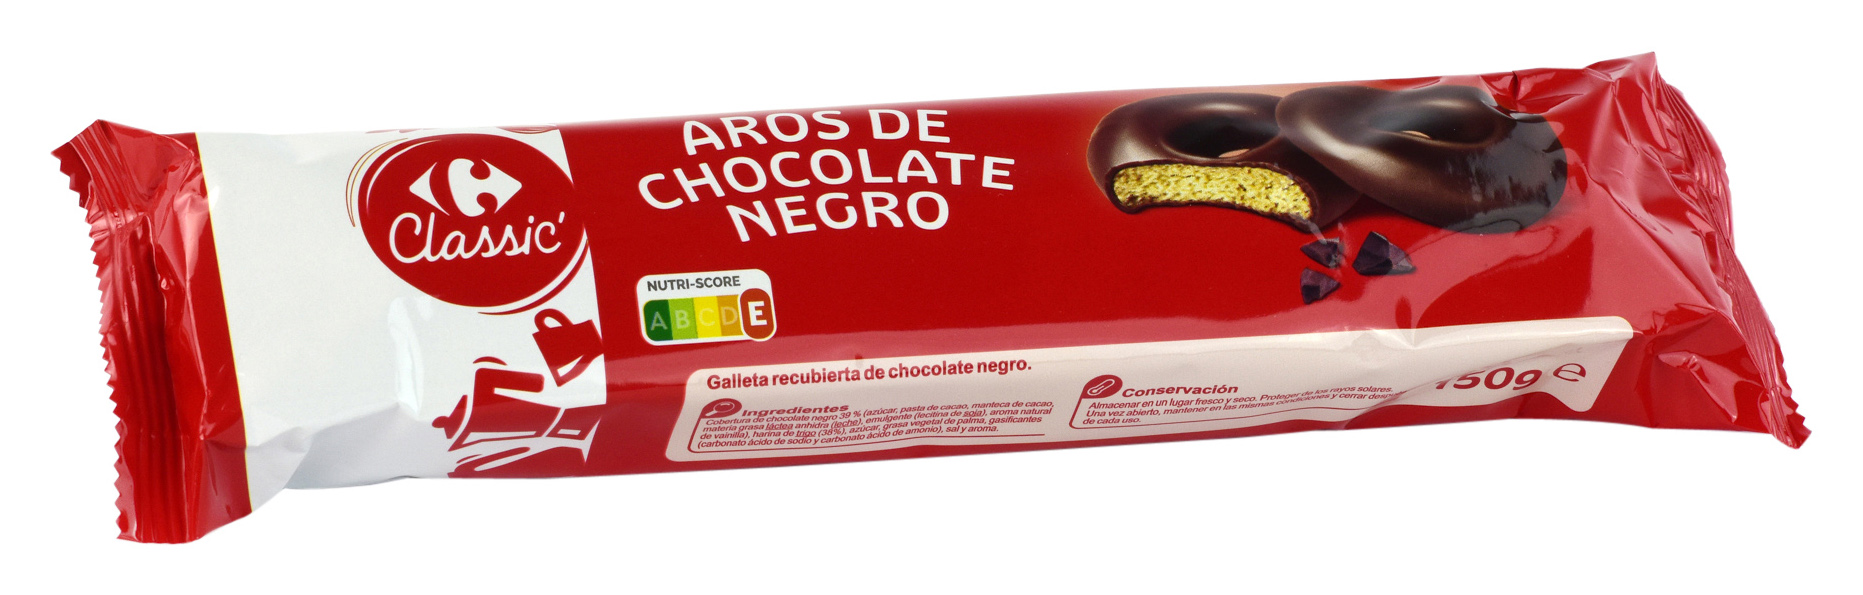 AROS DE CHOCOLATE NEGRO